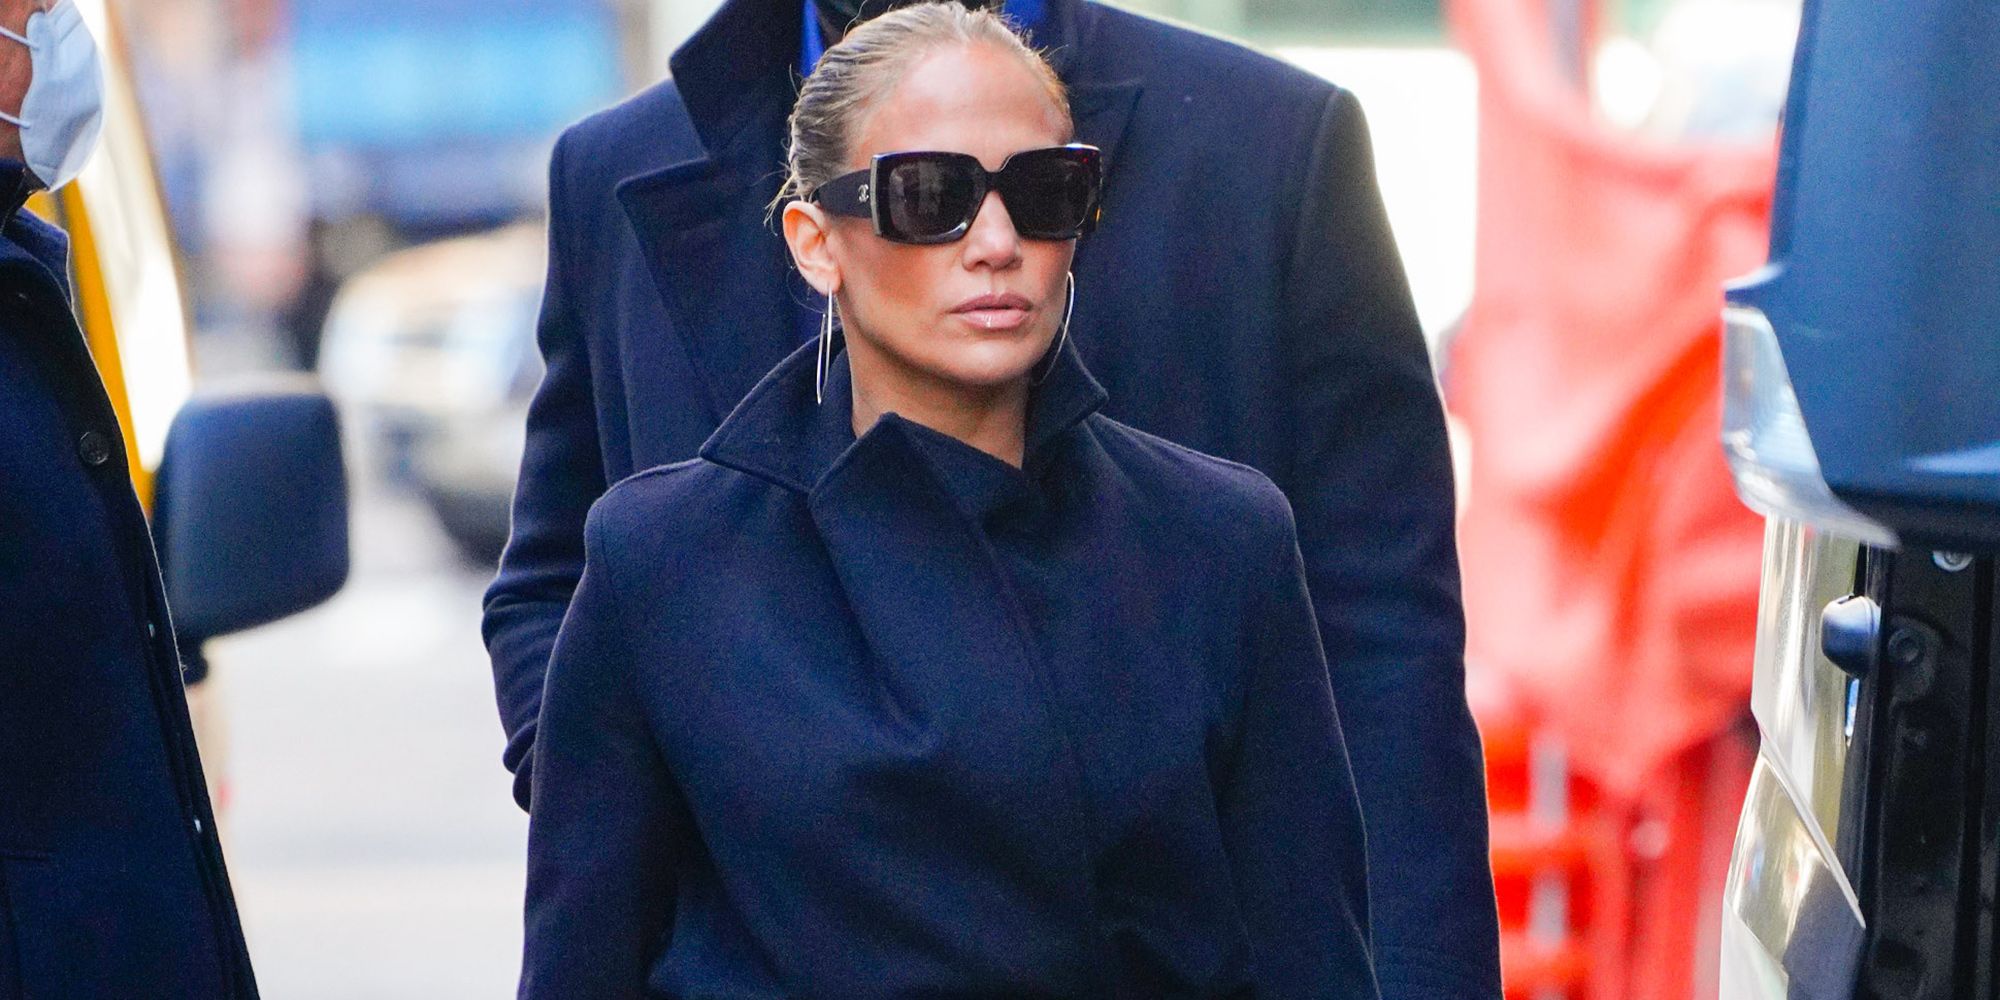 Jennifer Lopez abrigo extra largo con zapatillas